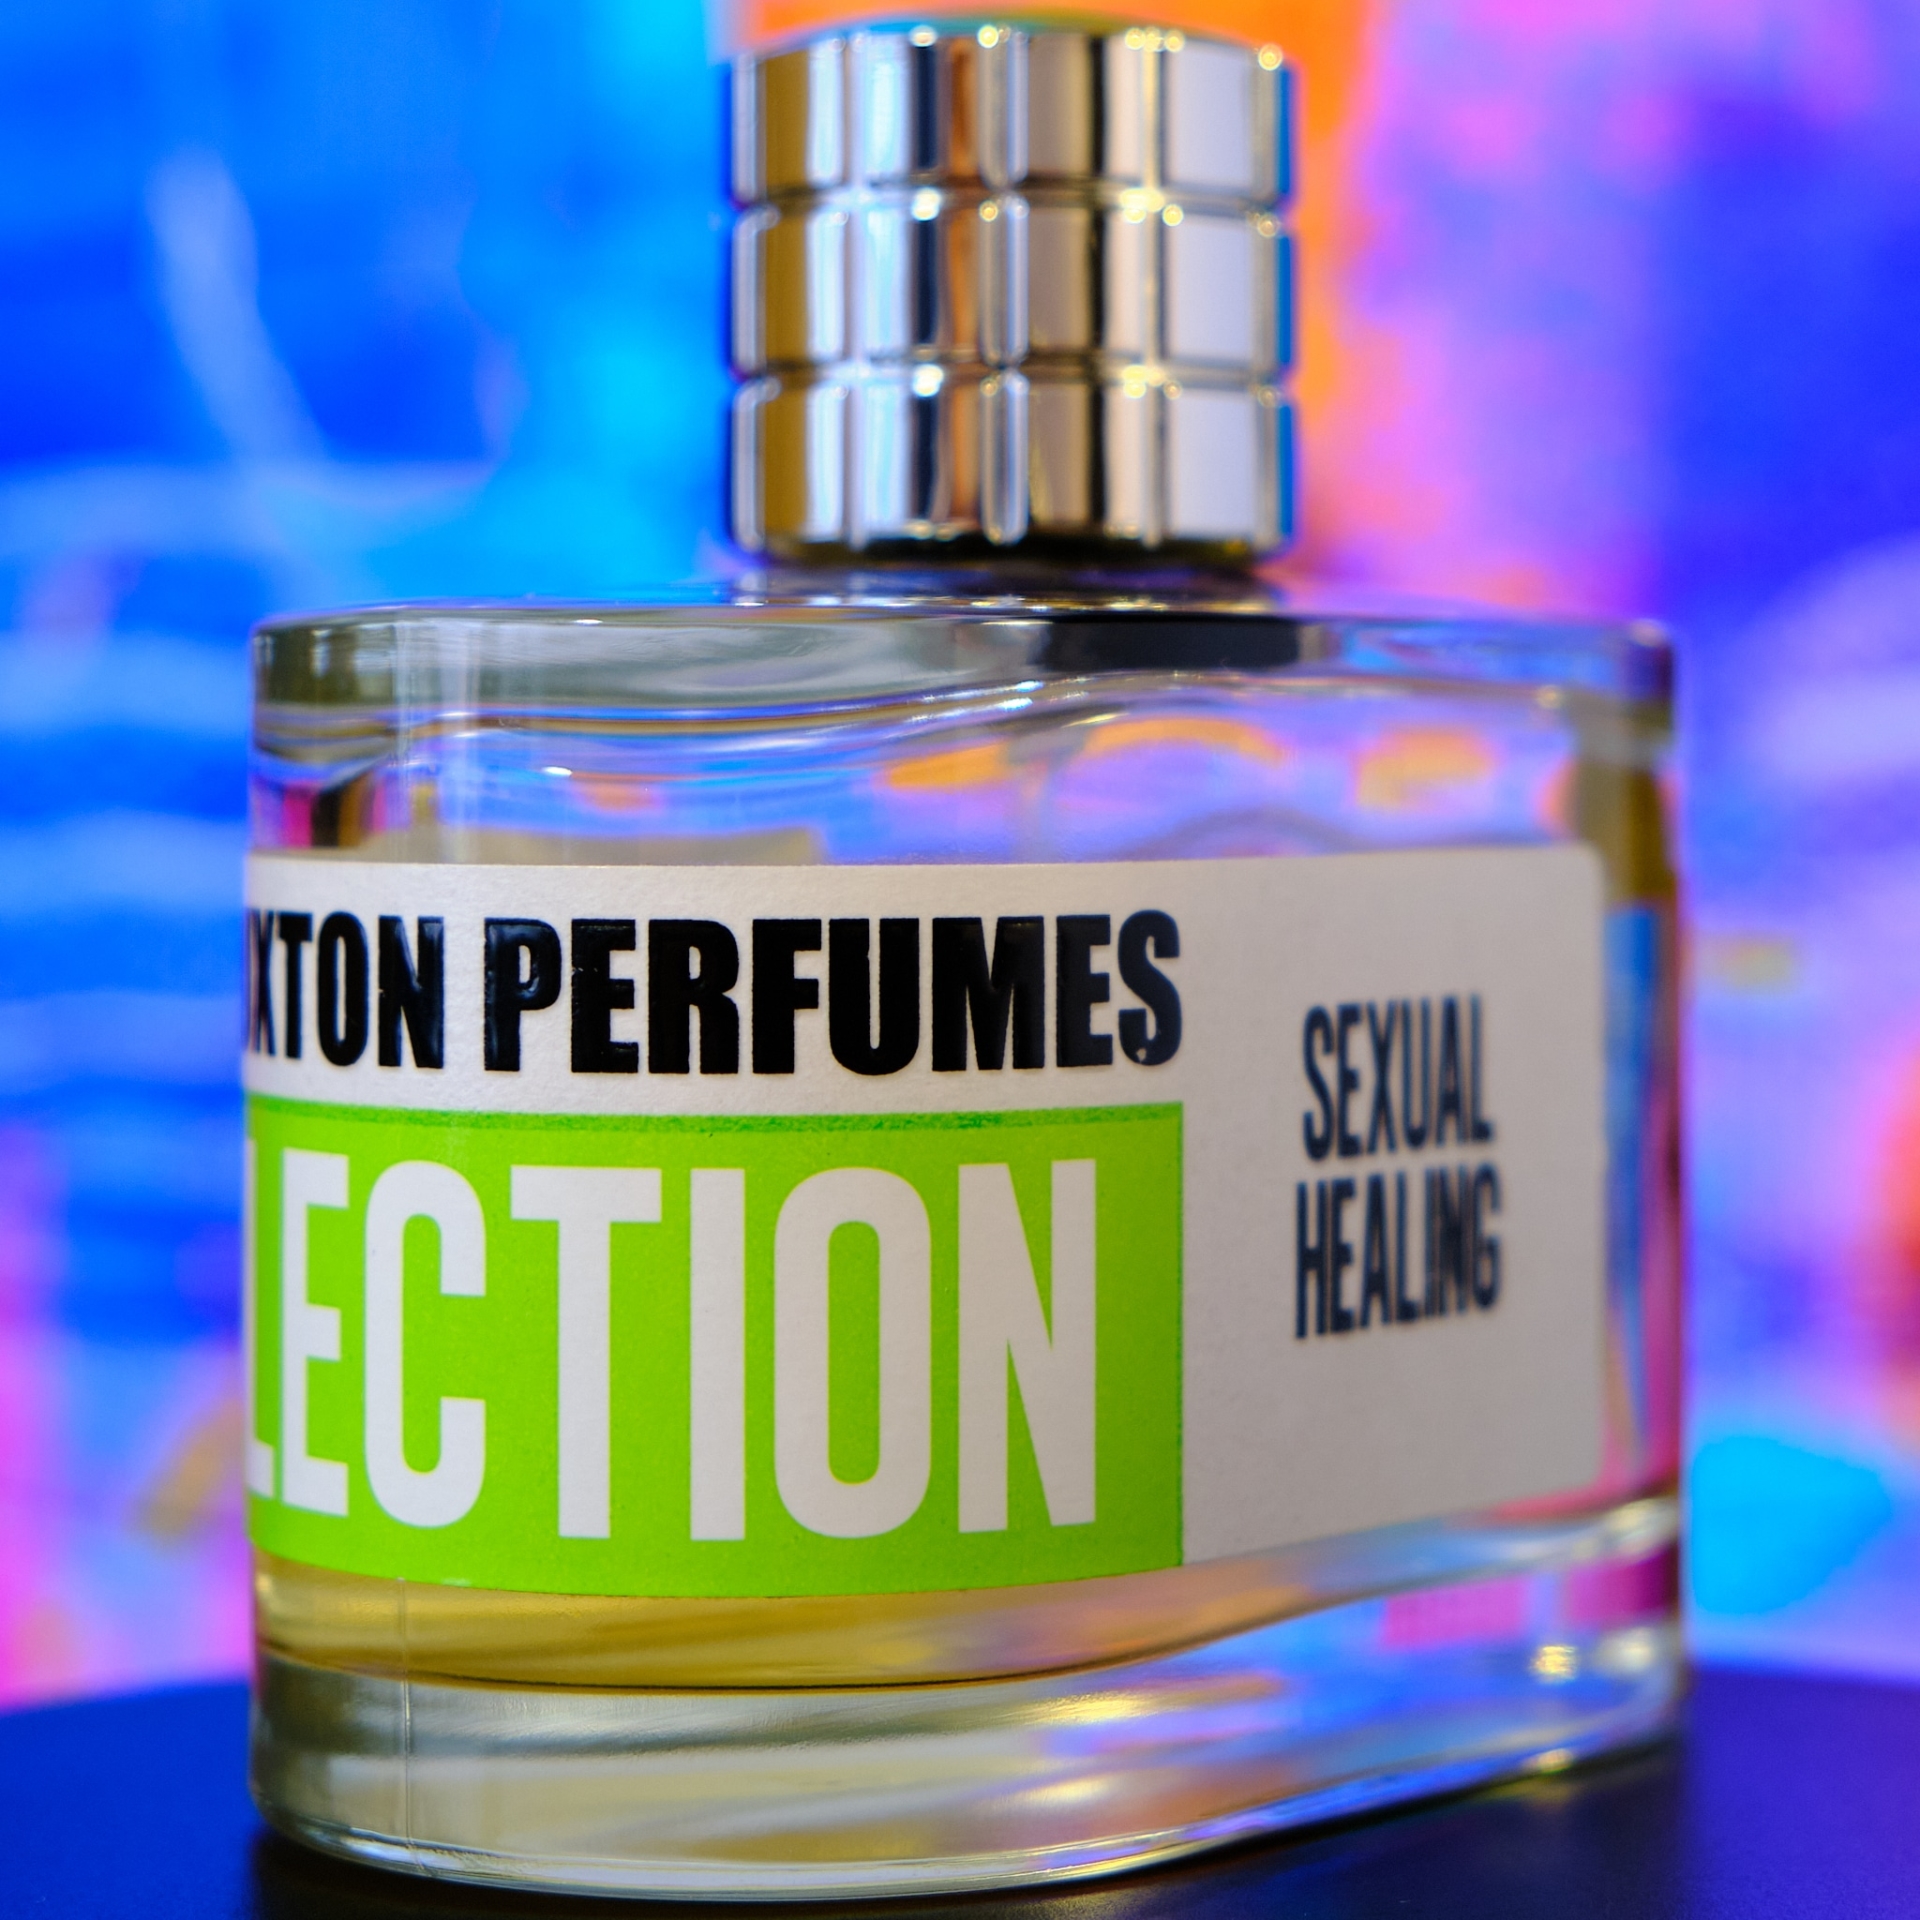 mark-buxton-perfumes-sexual-healing-1